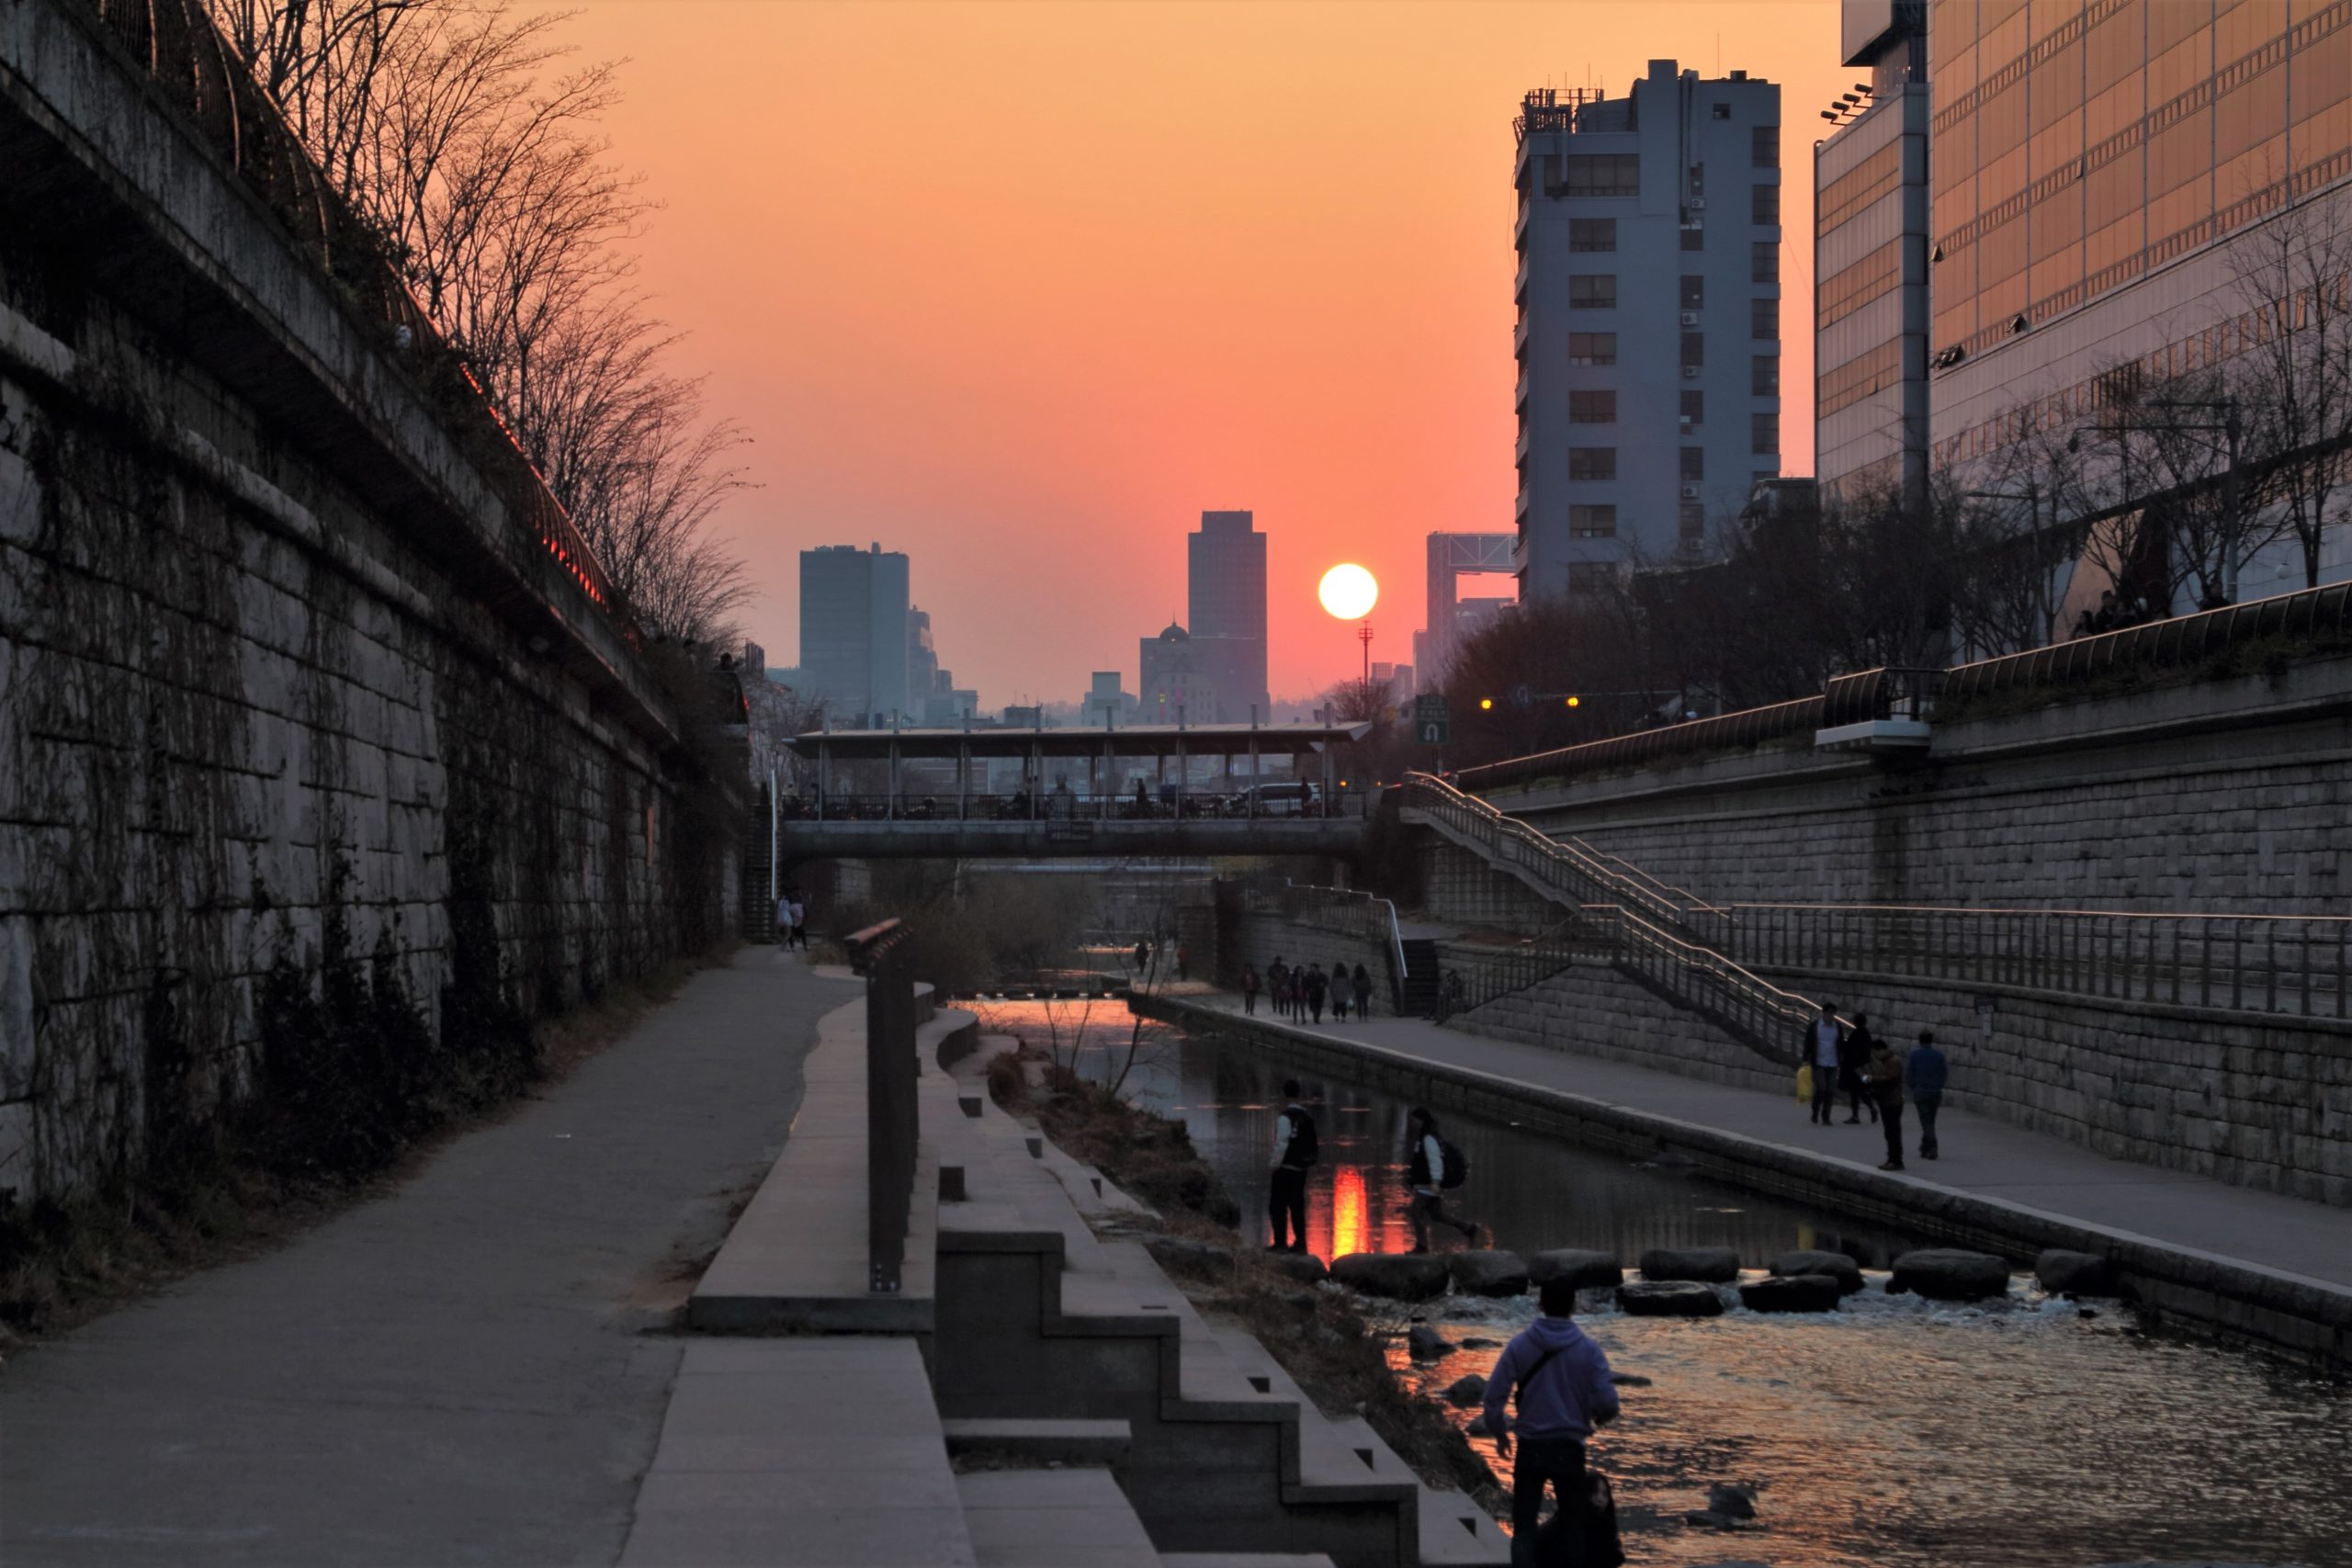 Cheonggyecheon Stream at sunset in Seoul